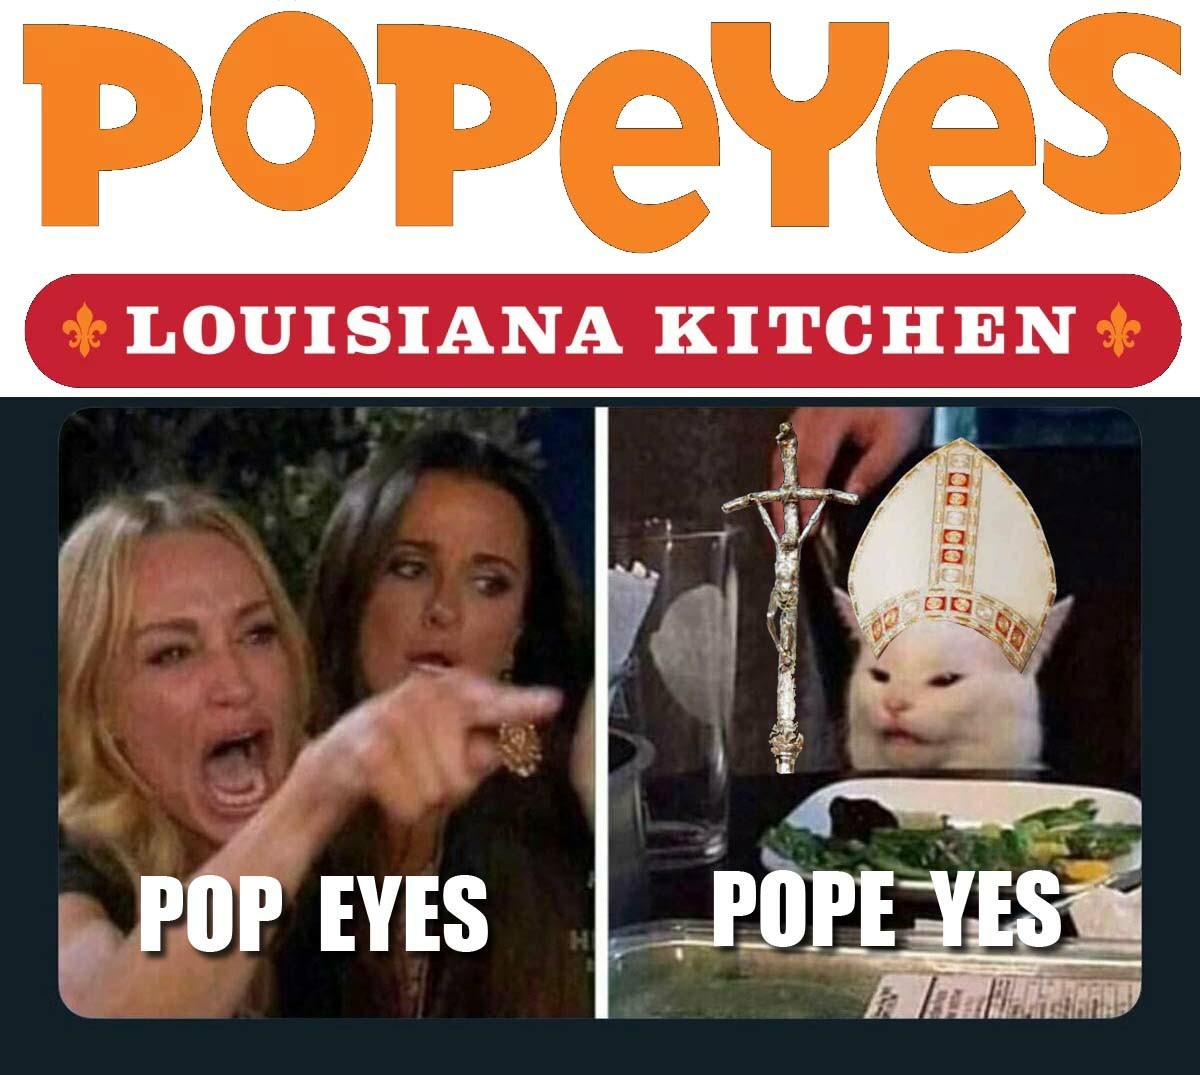 Popeyes - meme